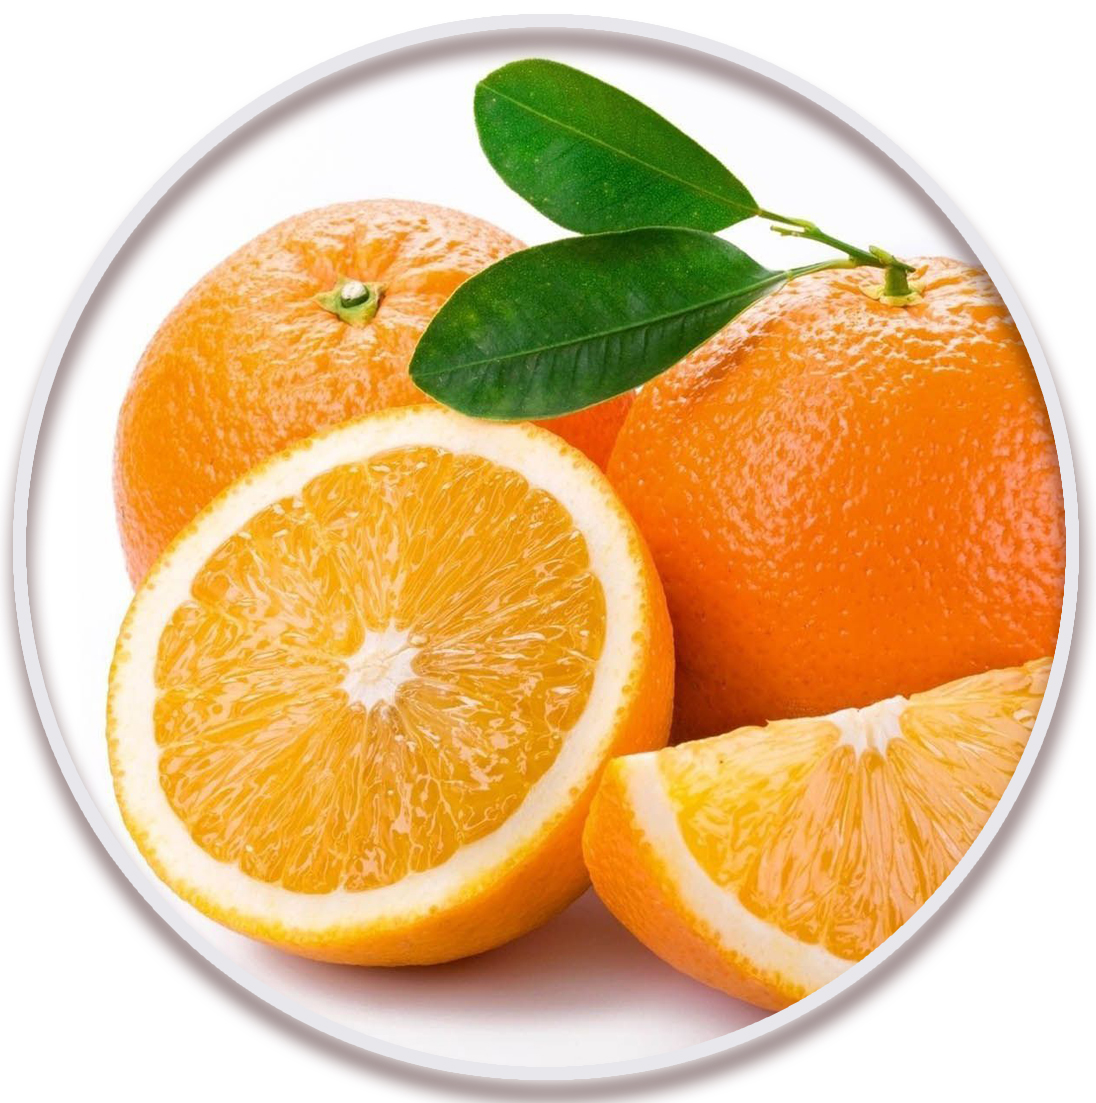 پرتقال تامسون ناول (Thomson Navel Orange)